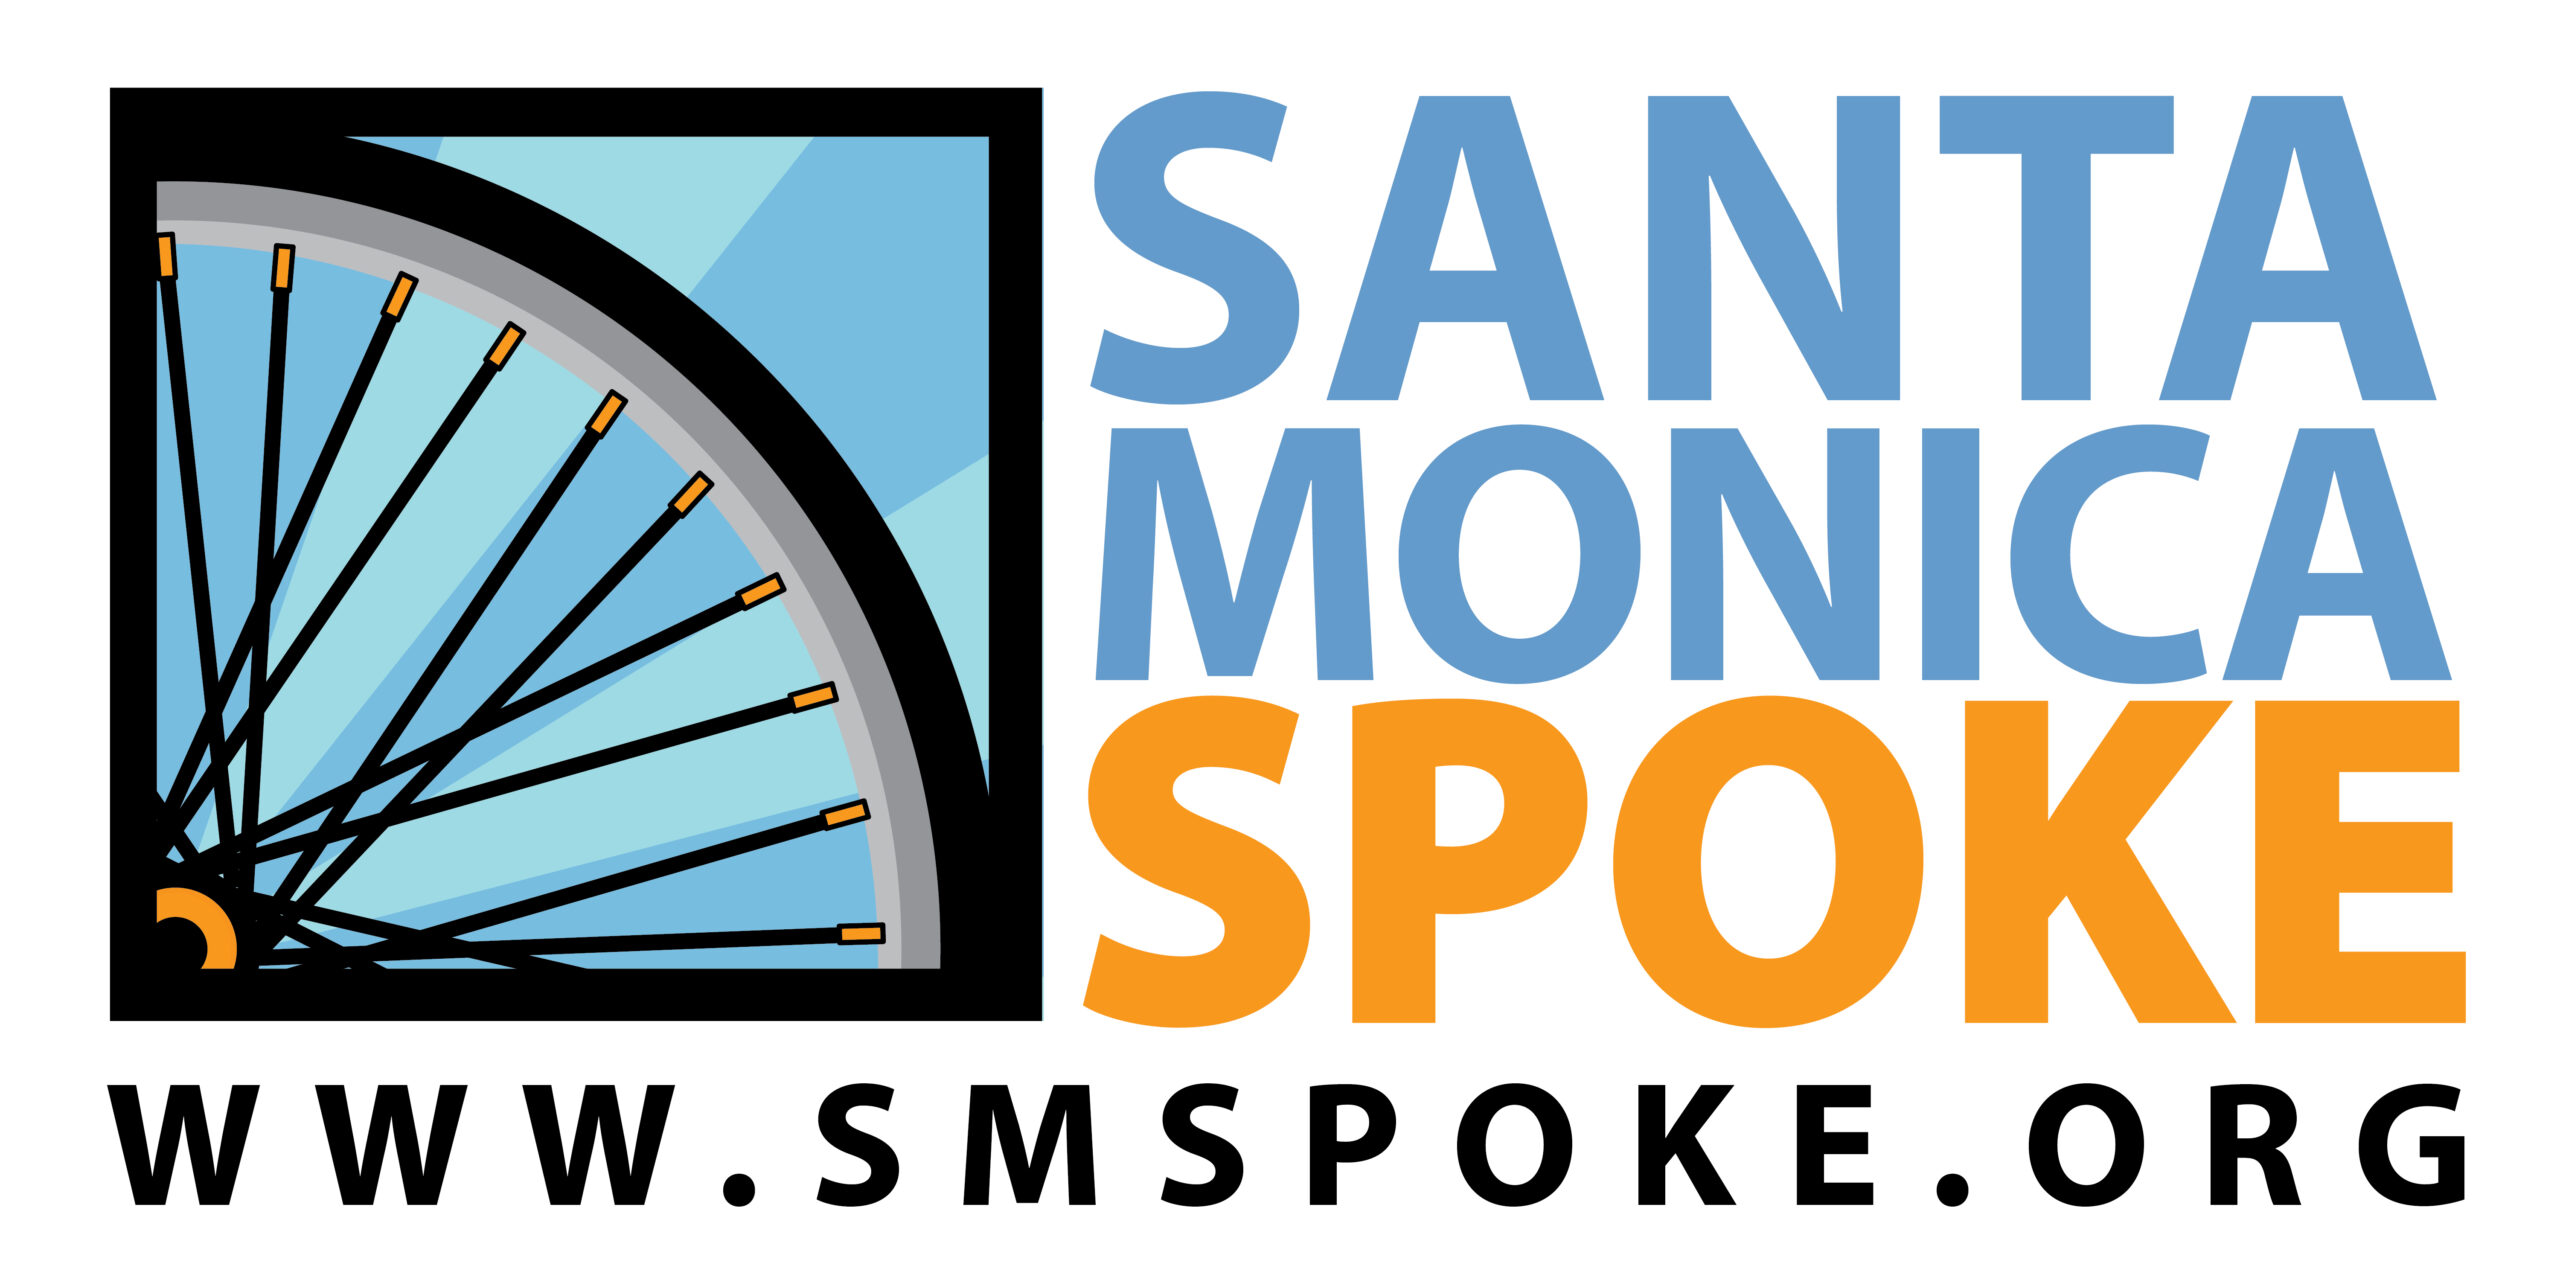  Santa Monica Spoke